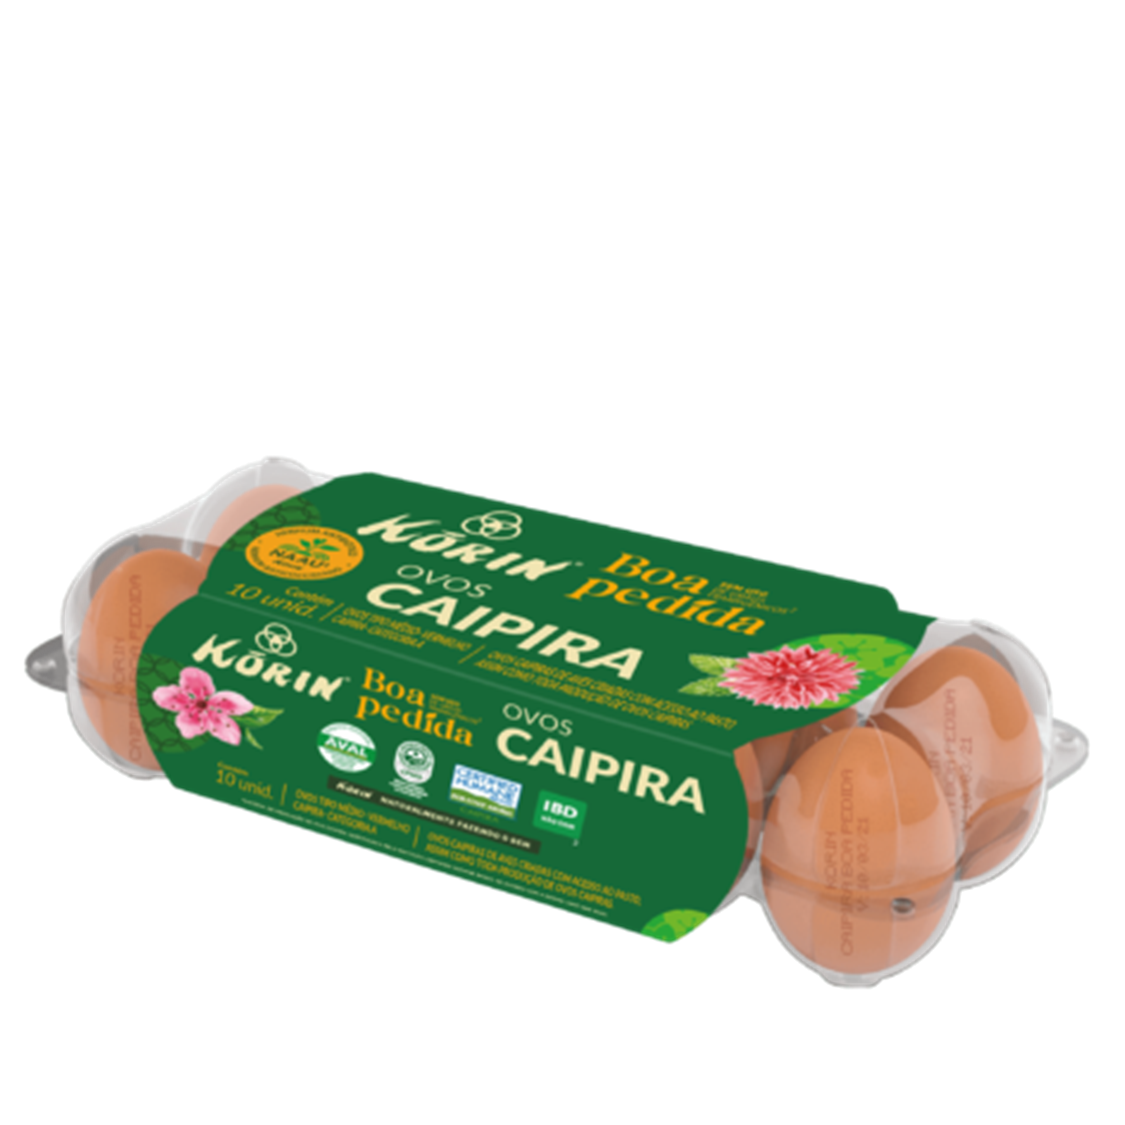 Ovos Caipiras (10un) – Korin